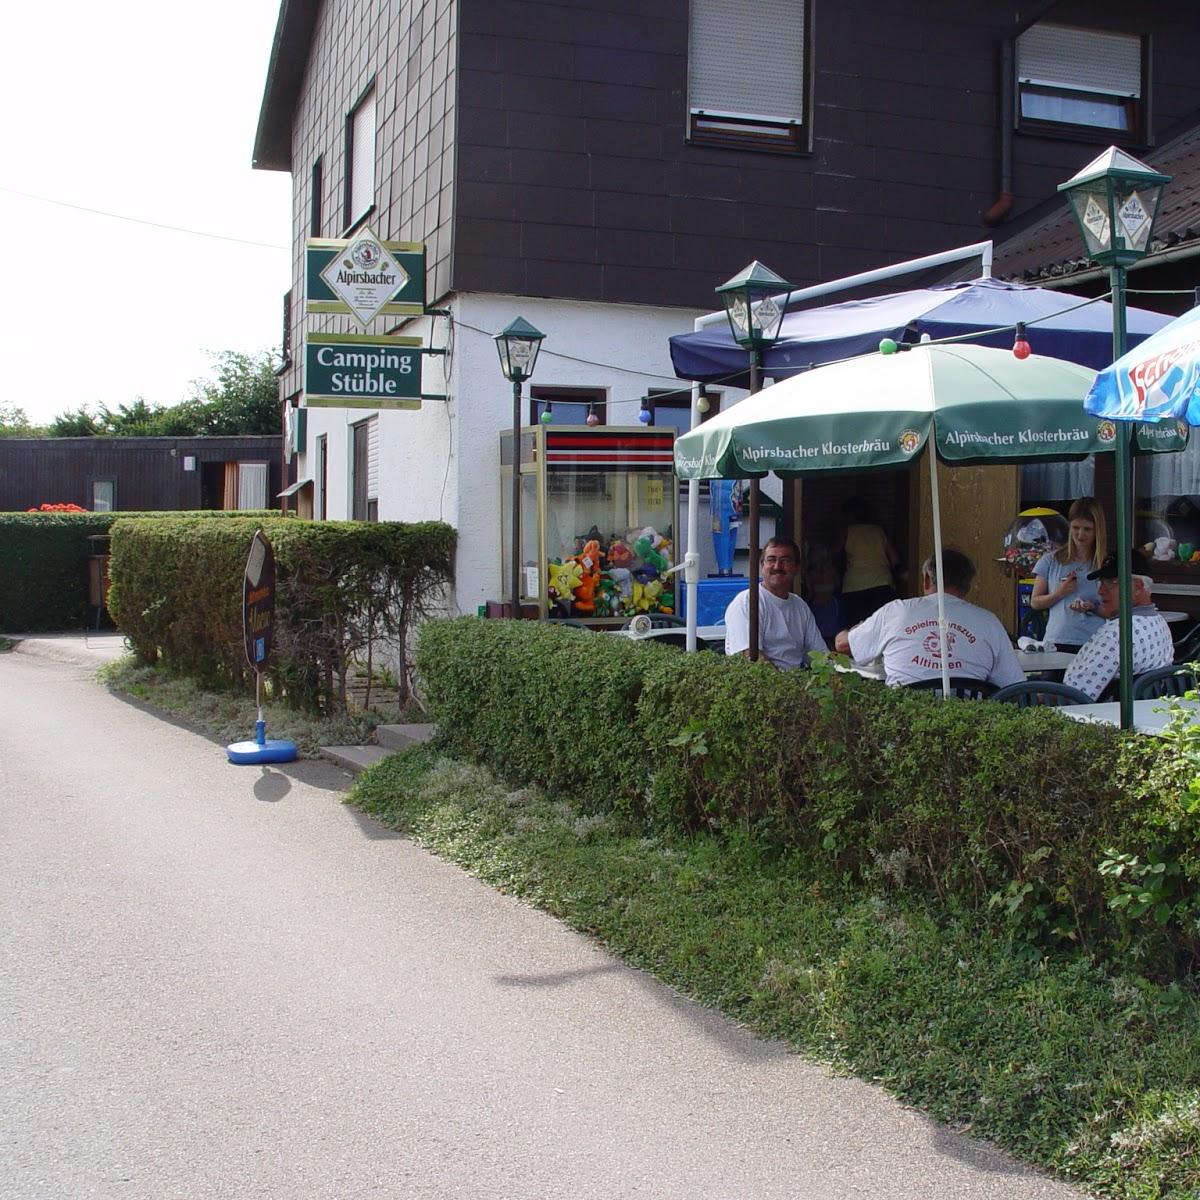 Restaurant "Campingstüble" in Neubulach